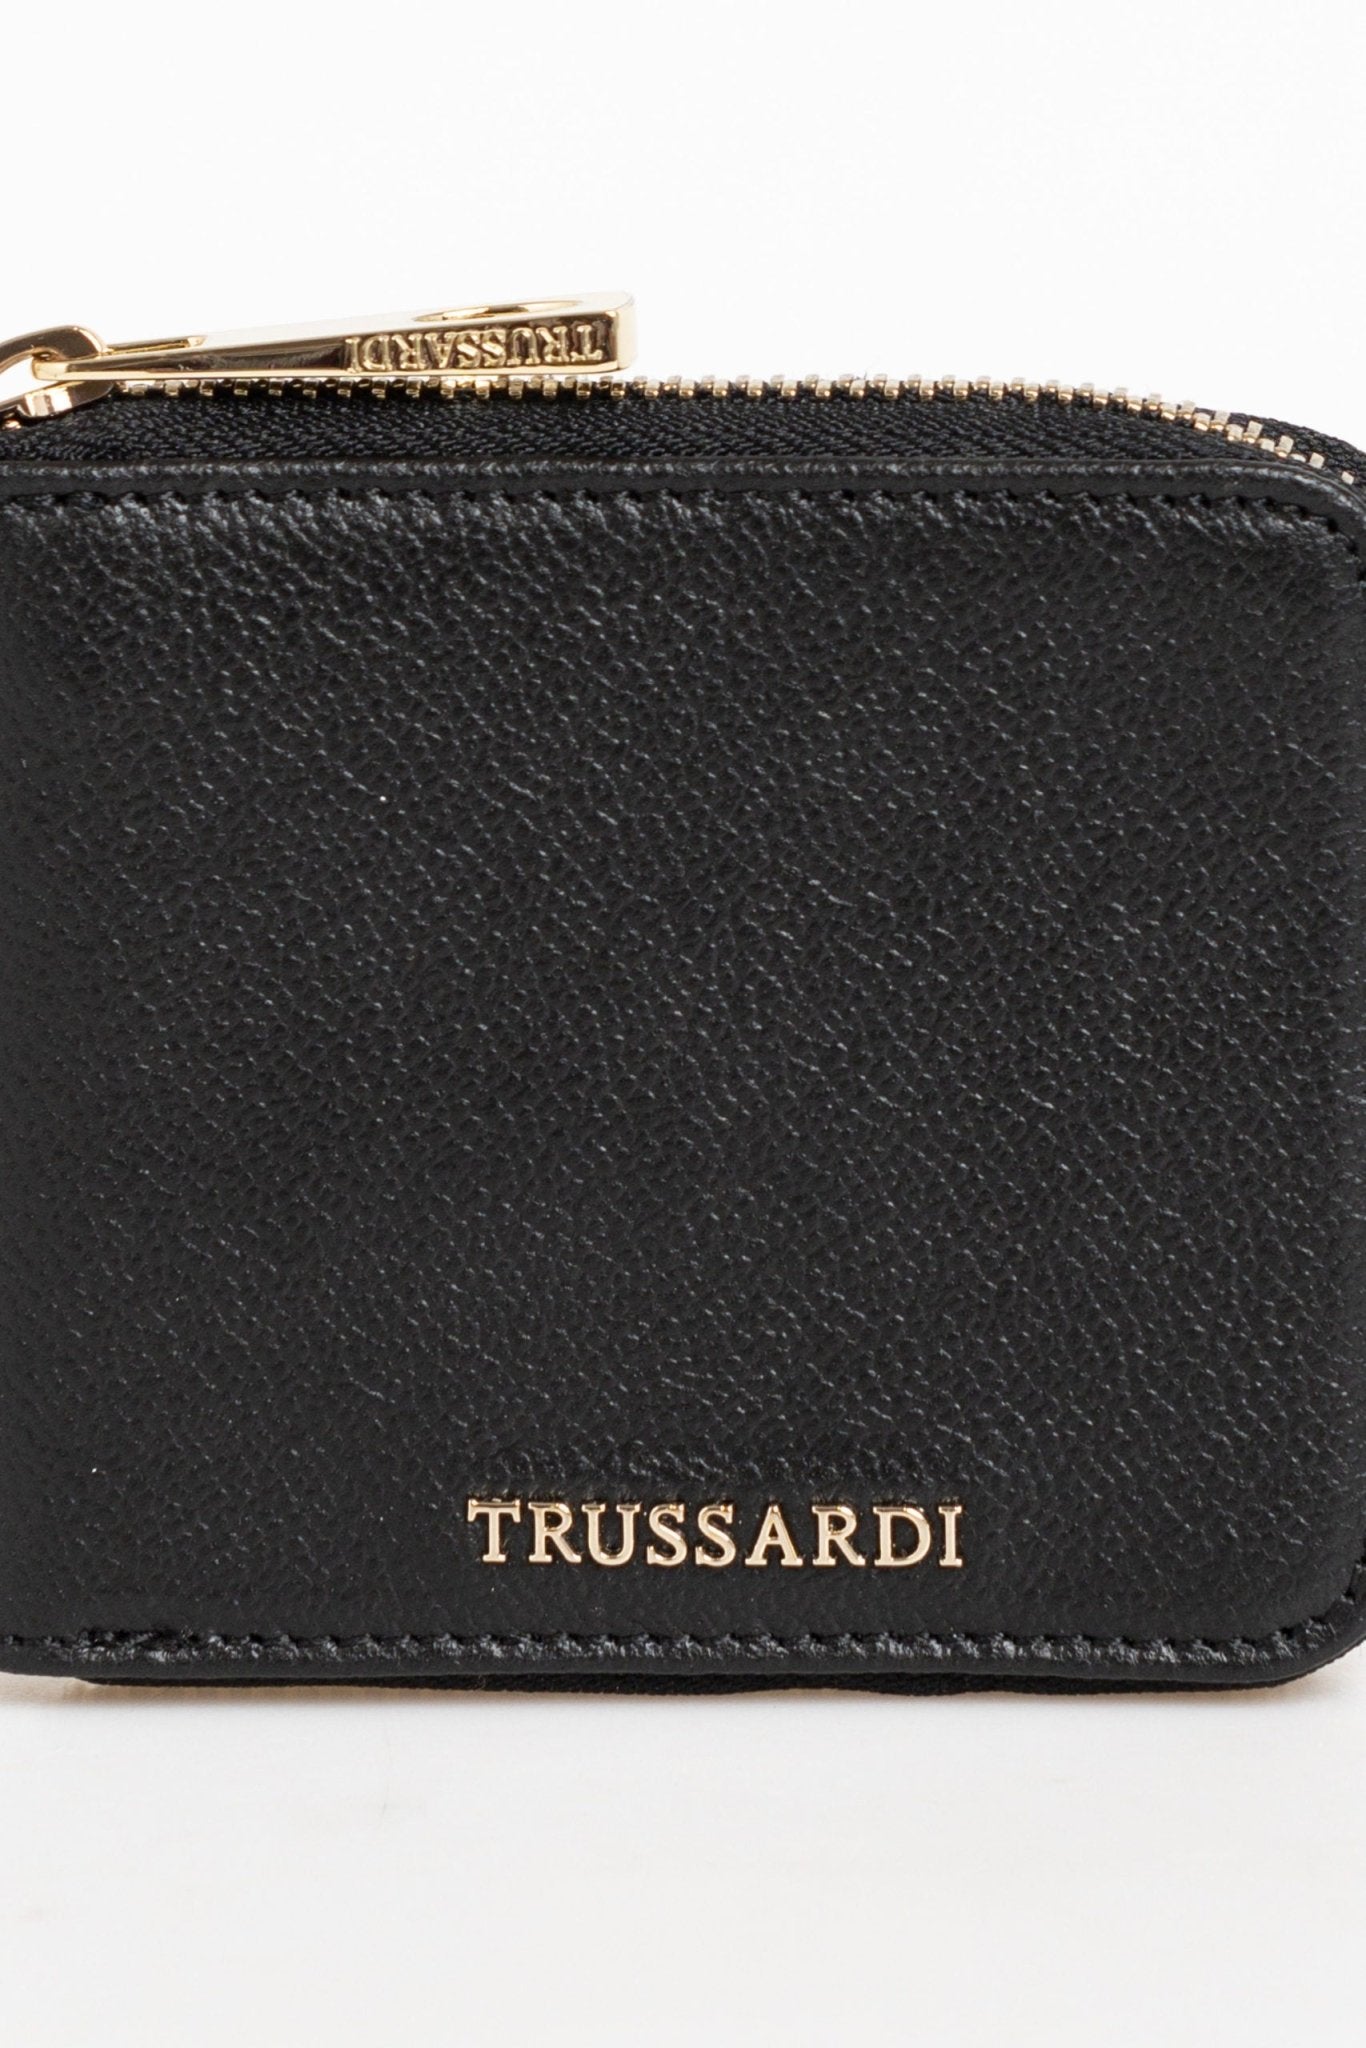 Trussardi Black Leather Wallet - Fizigo